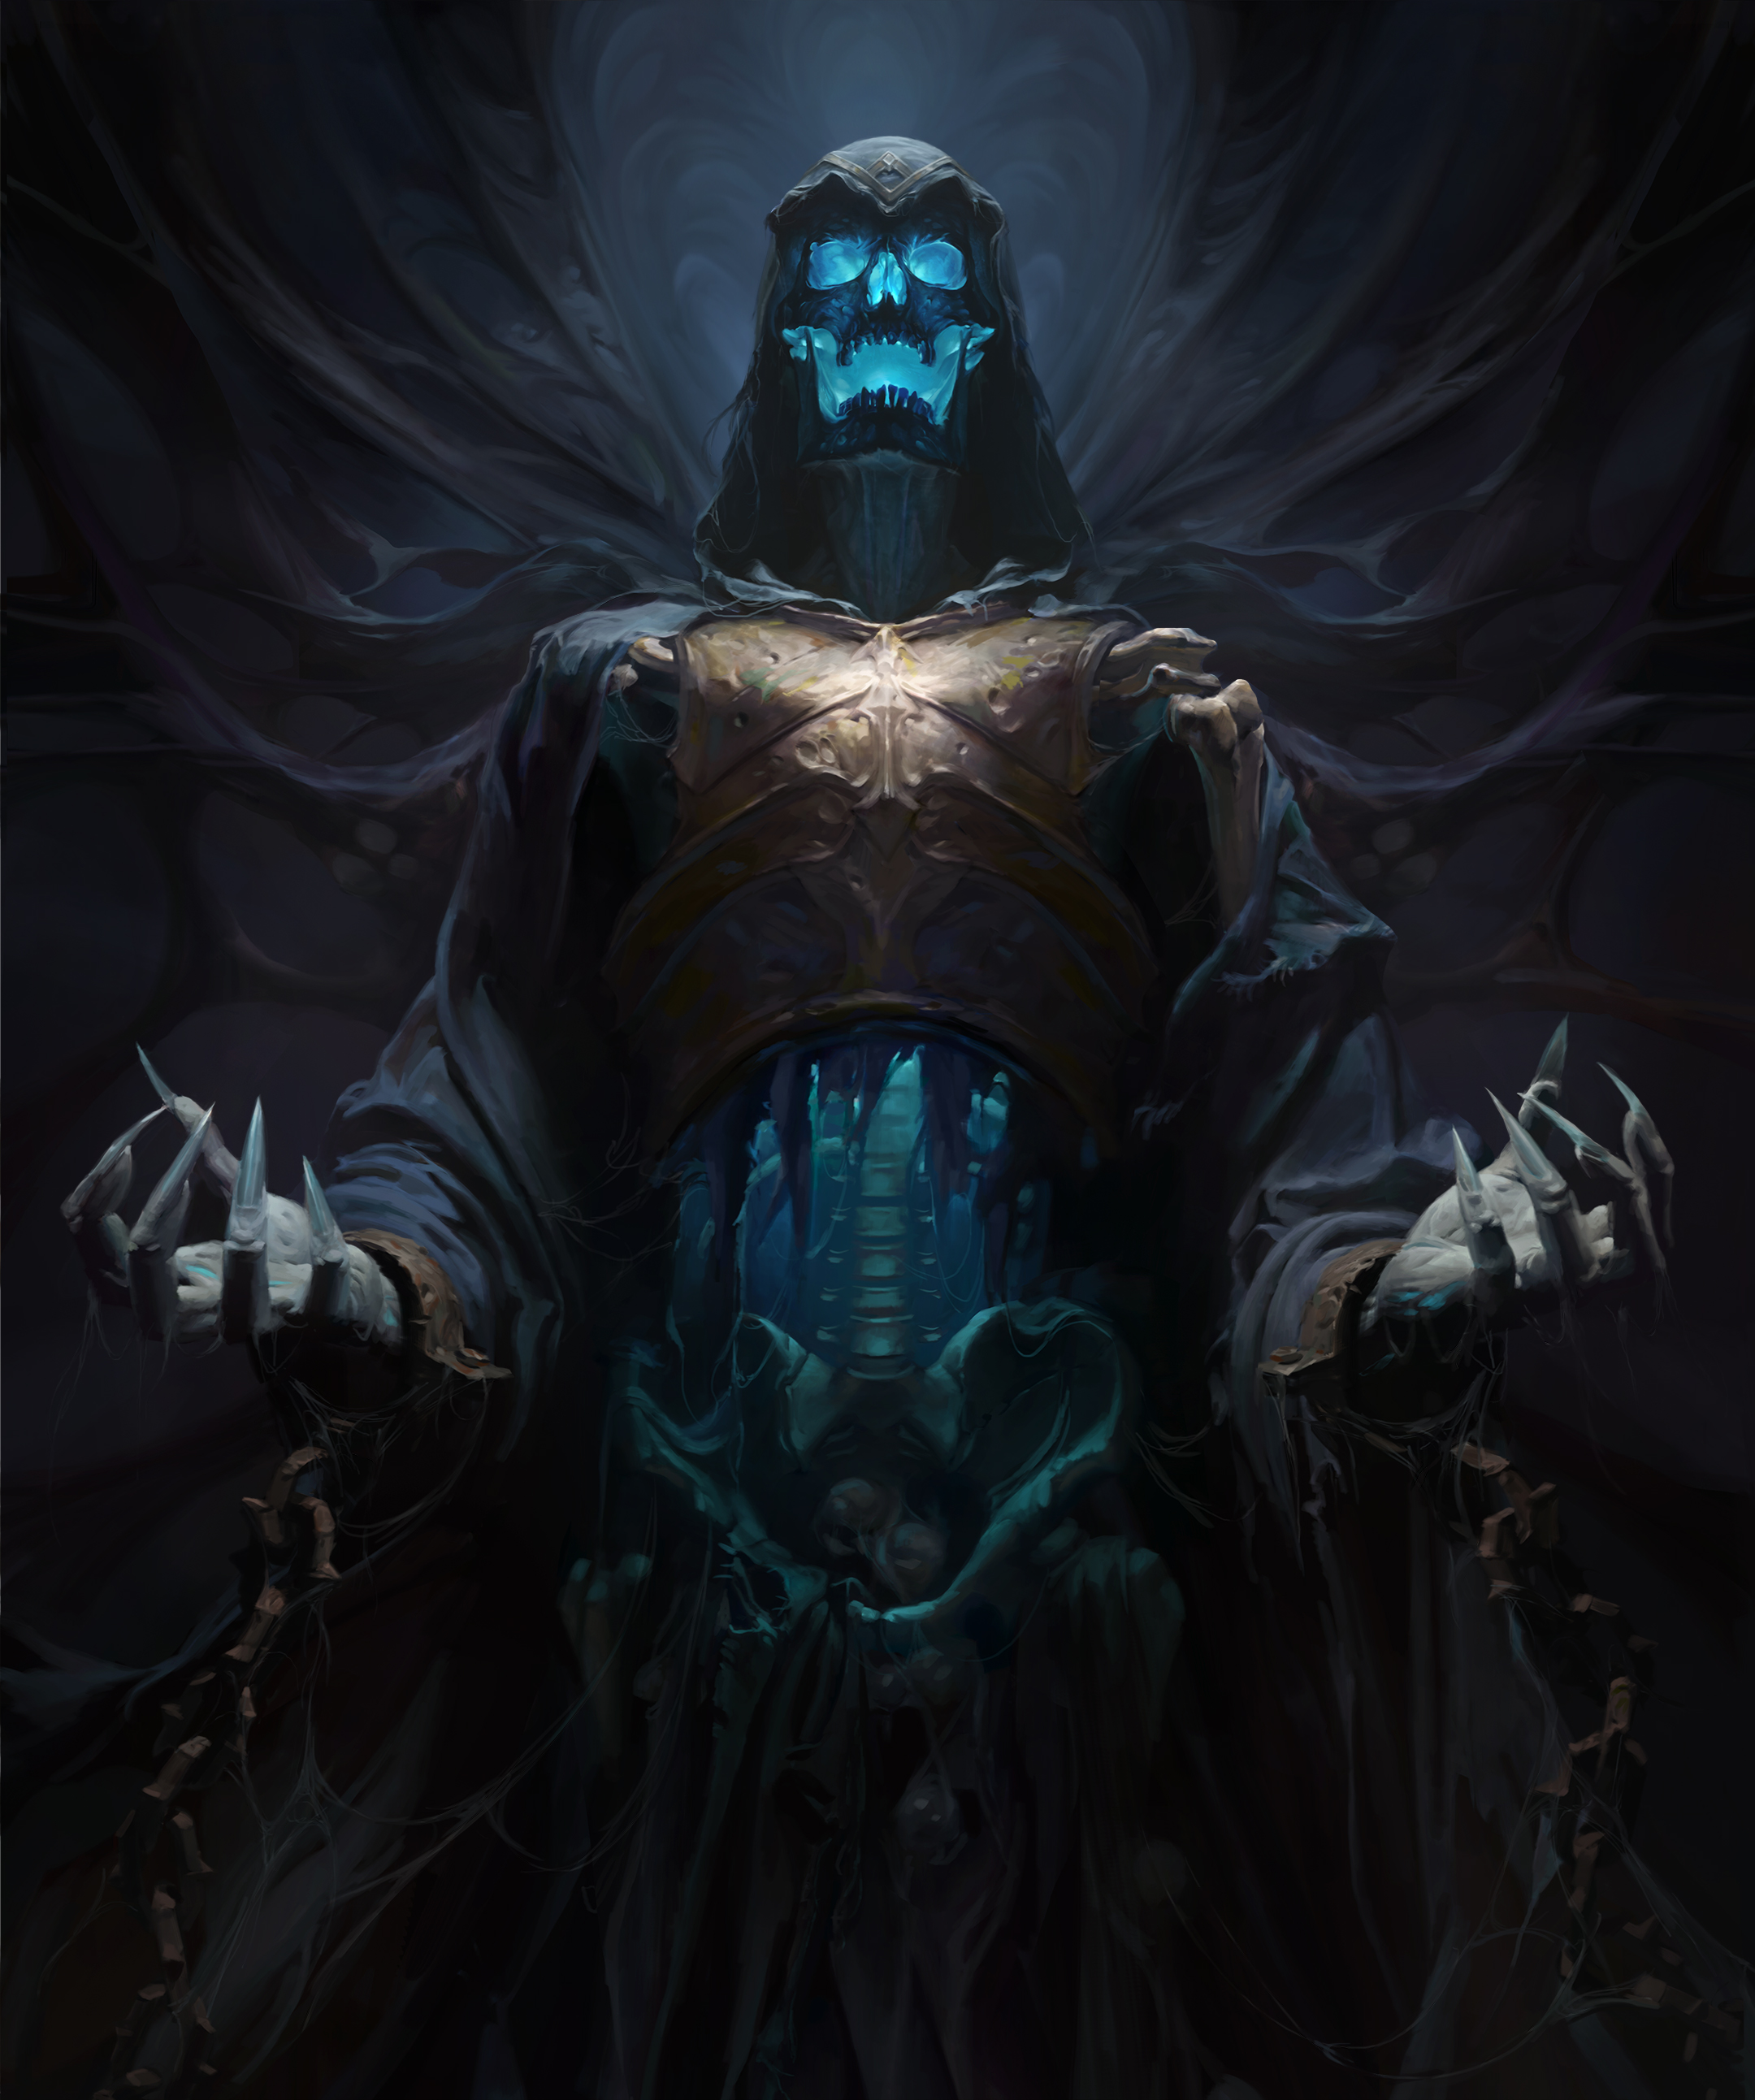 General 2160x2585 Diablo Diablo Immortal video games fantasy art skull PC gaming video game art